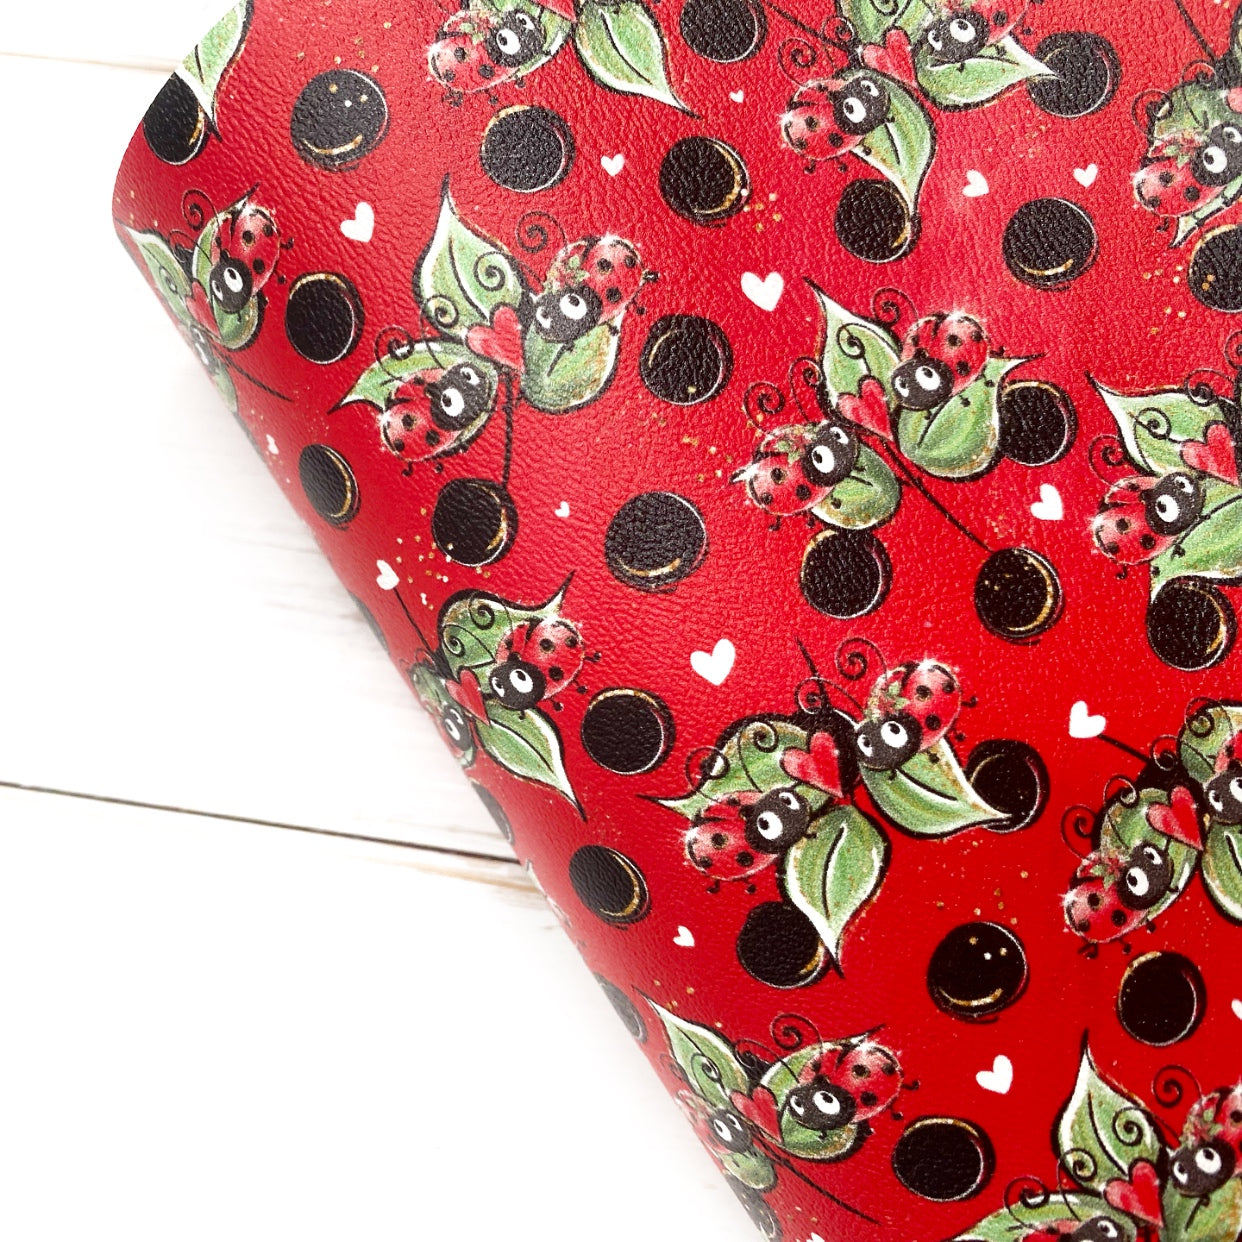 Ladybug Land Polka Dot Red Premium Faux Leather Fabric Sheets